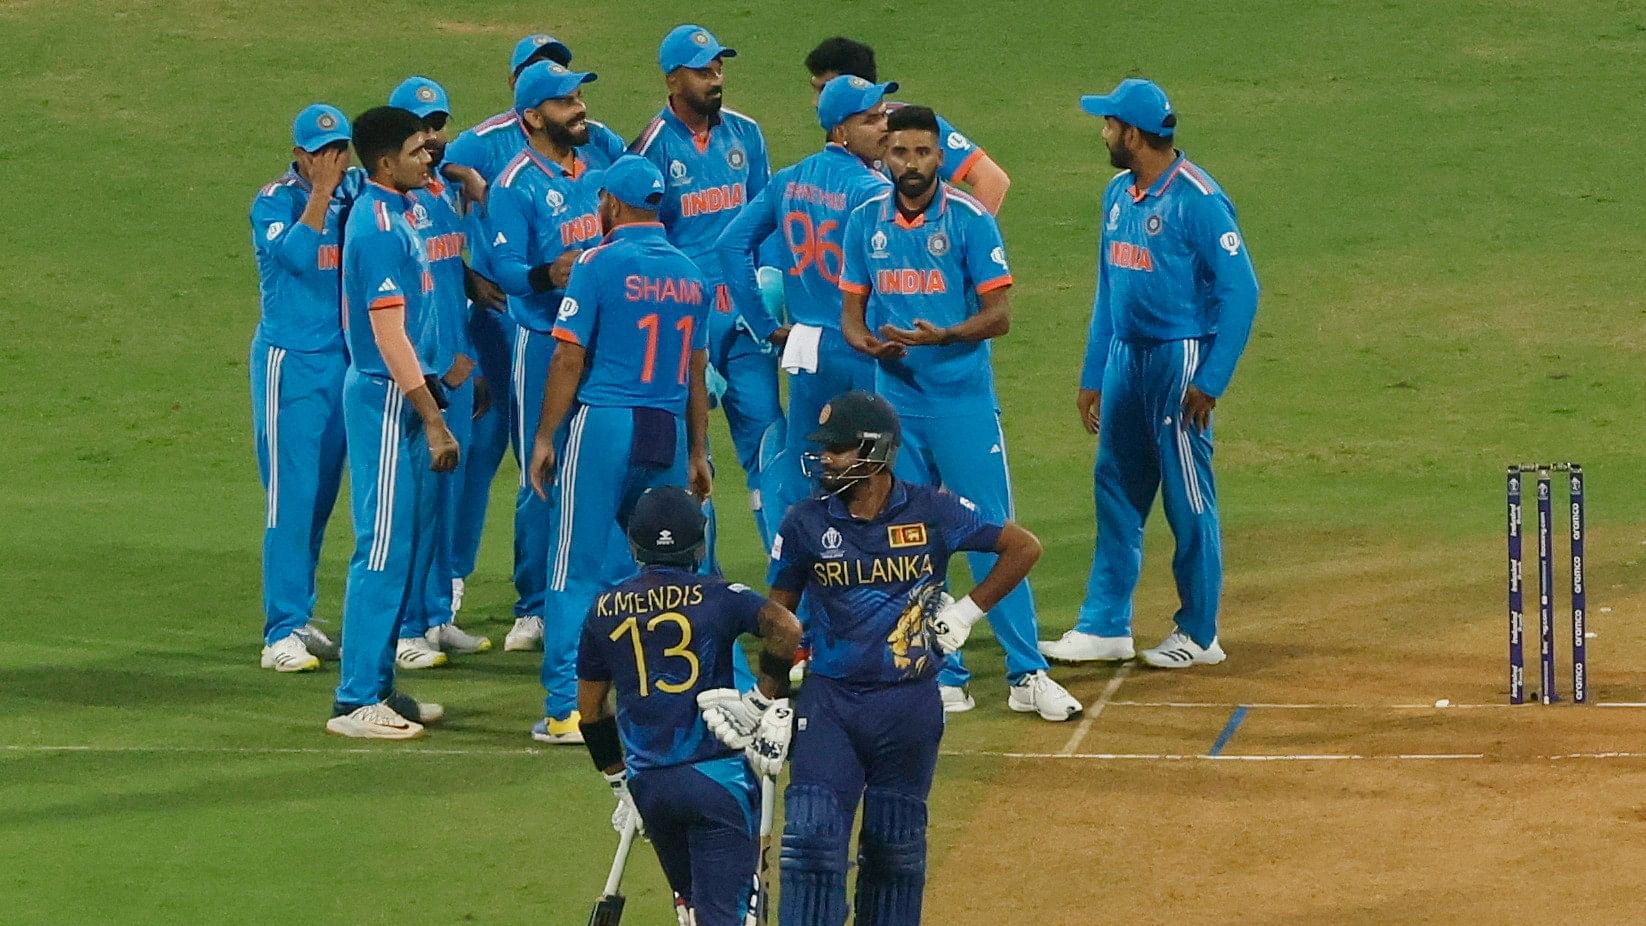 <div class="paragraphs"><p>On November 2, India beat Sri Lanka by a whopping 302 runs.</p></div>